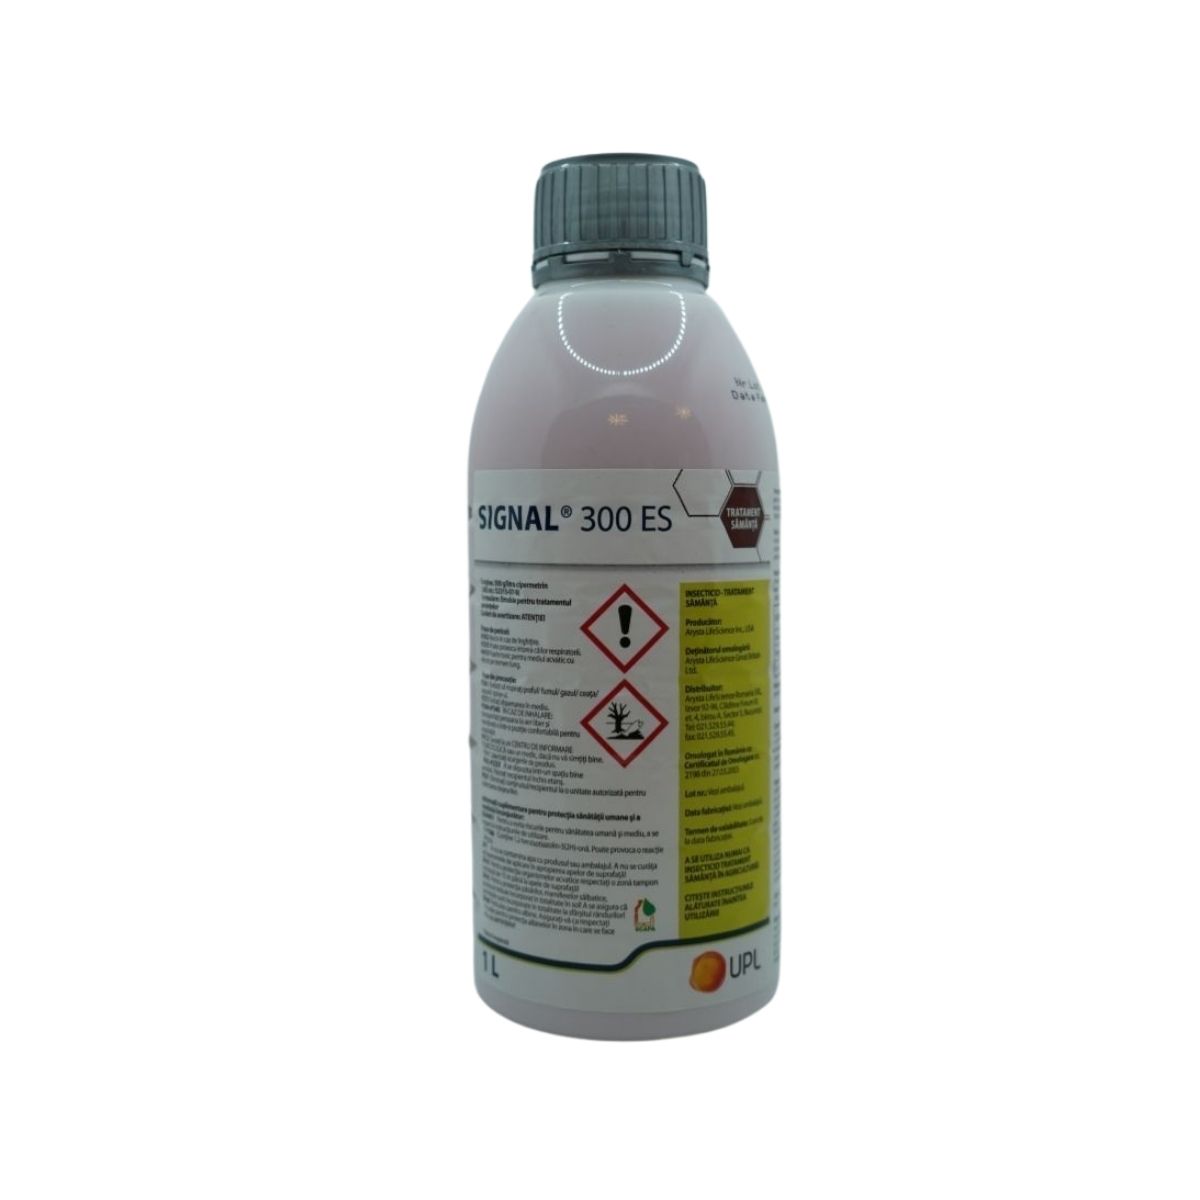 Tratament samanta - Tratament samanta insecticid Signal 300 FS, 1 L, hectarul.ro